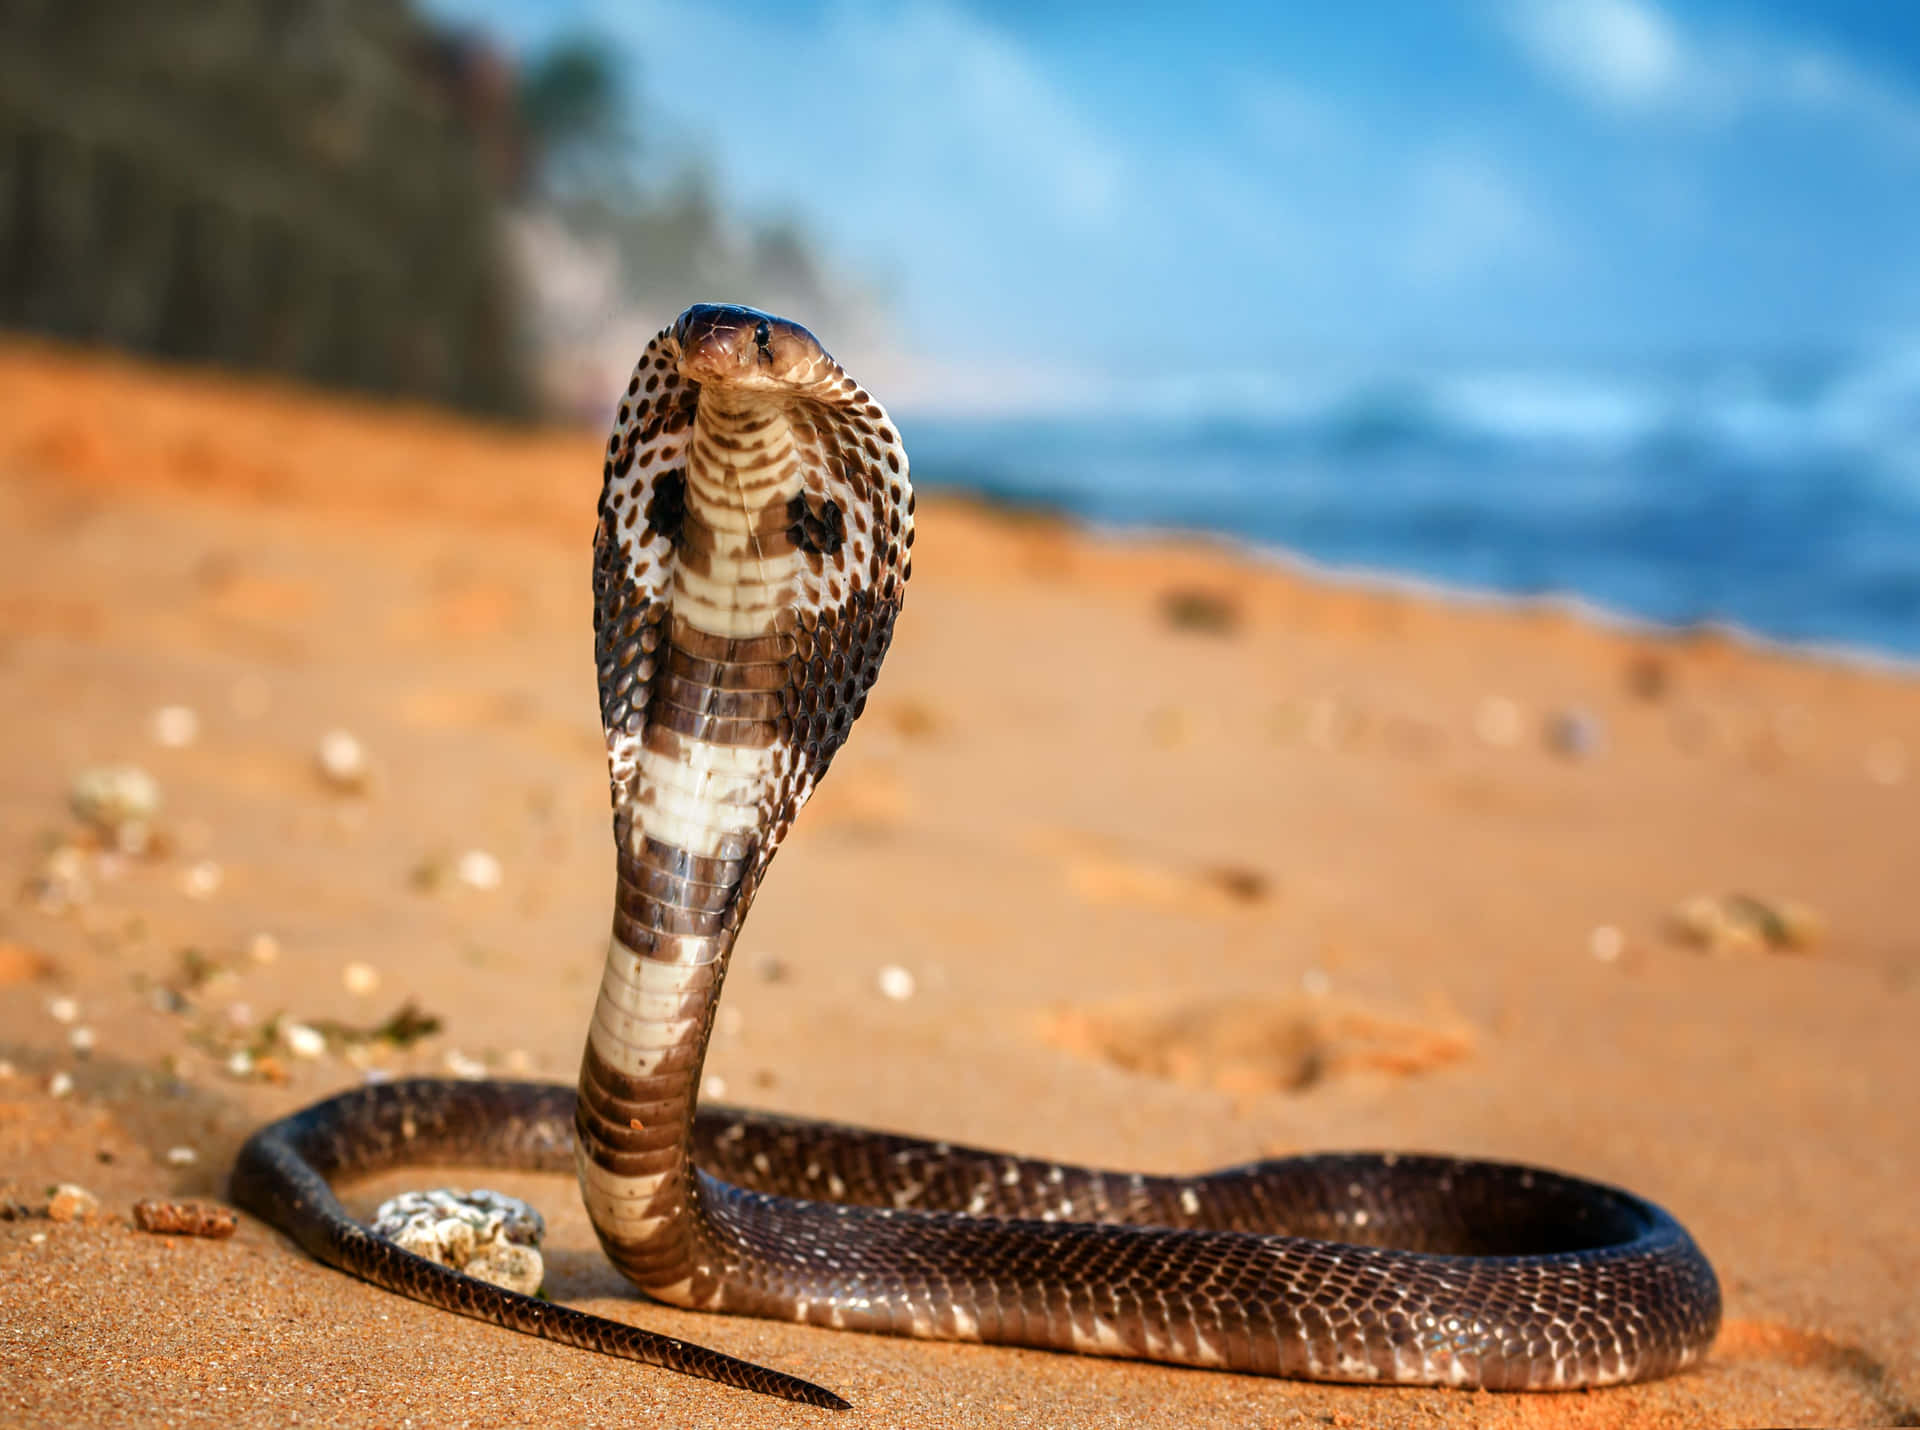 Umaassustadora Cobra-rei Se Desenrola Em Seu Habitat Natural.